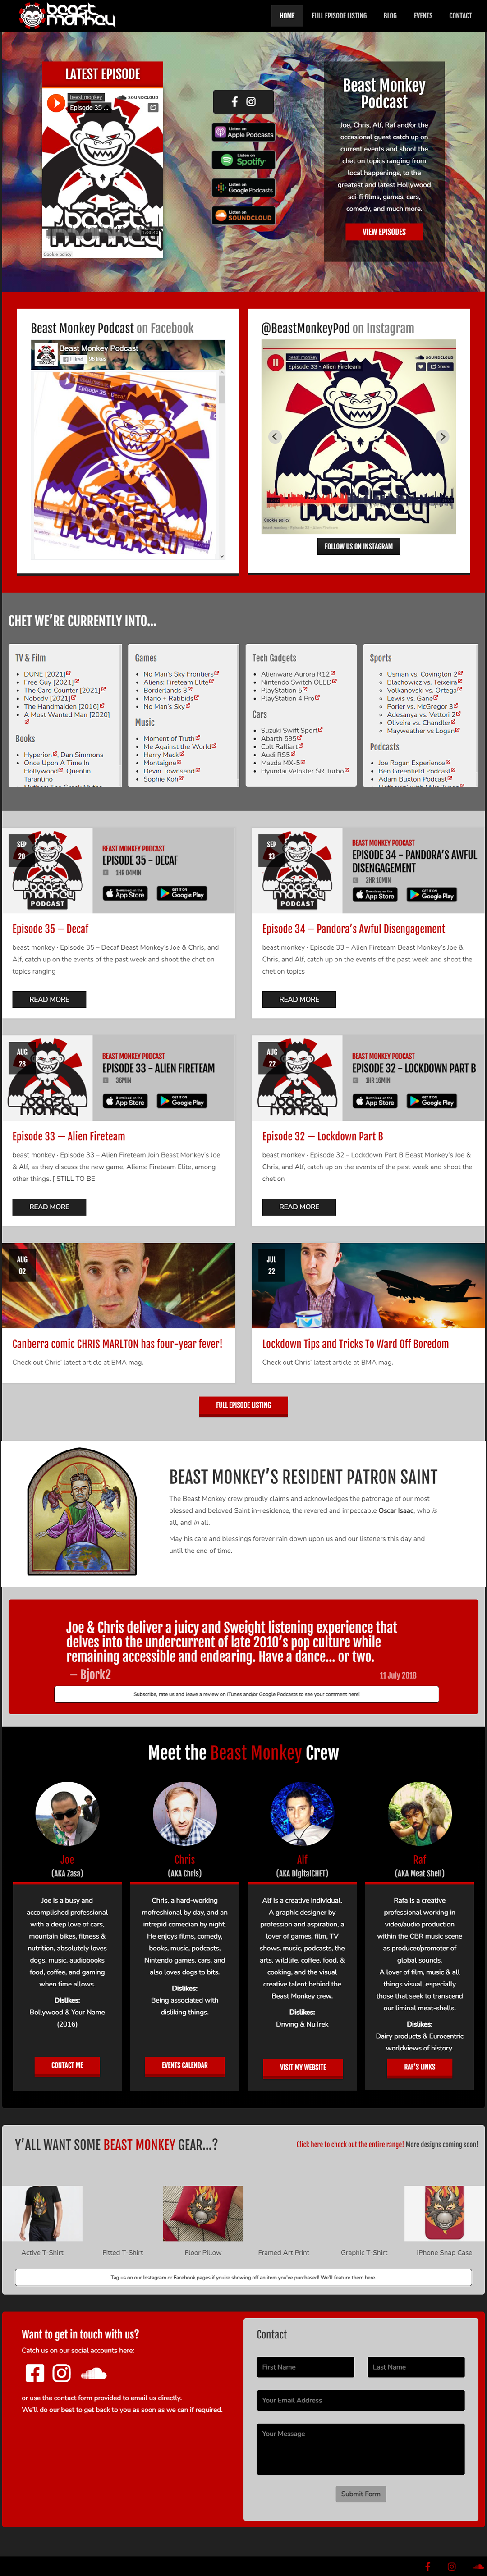 Visit Beast Monkey website.